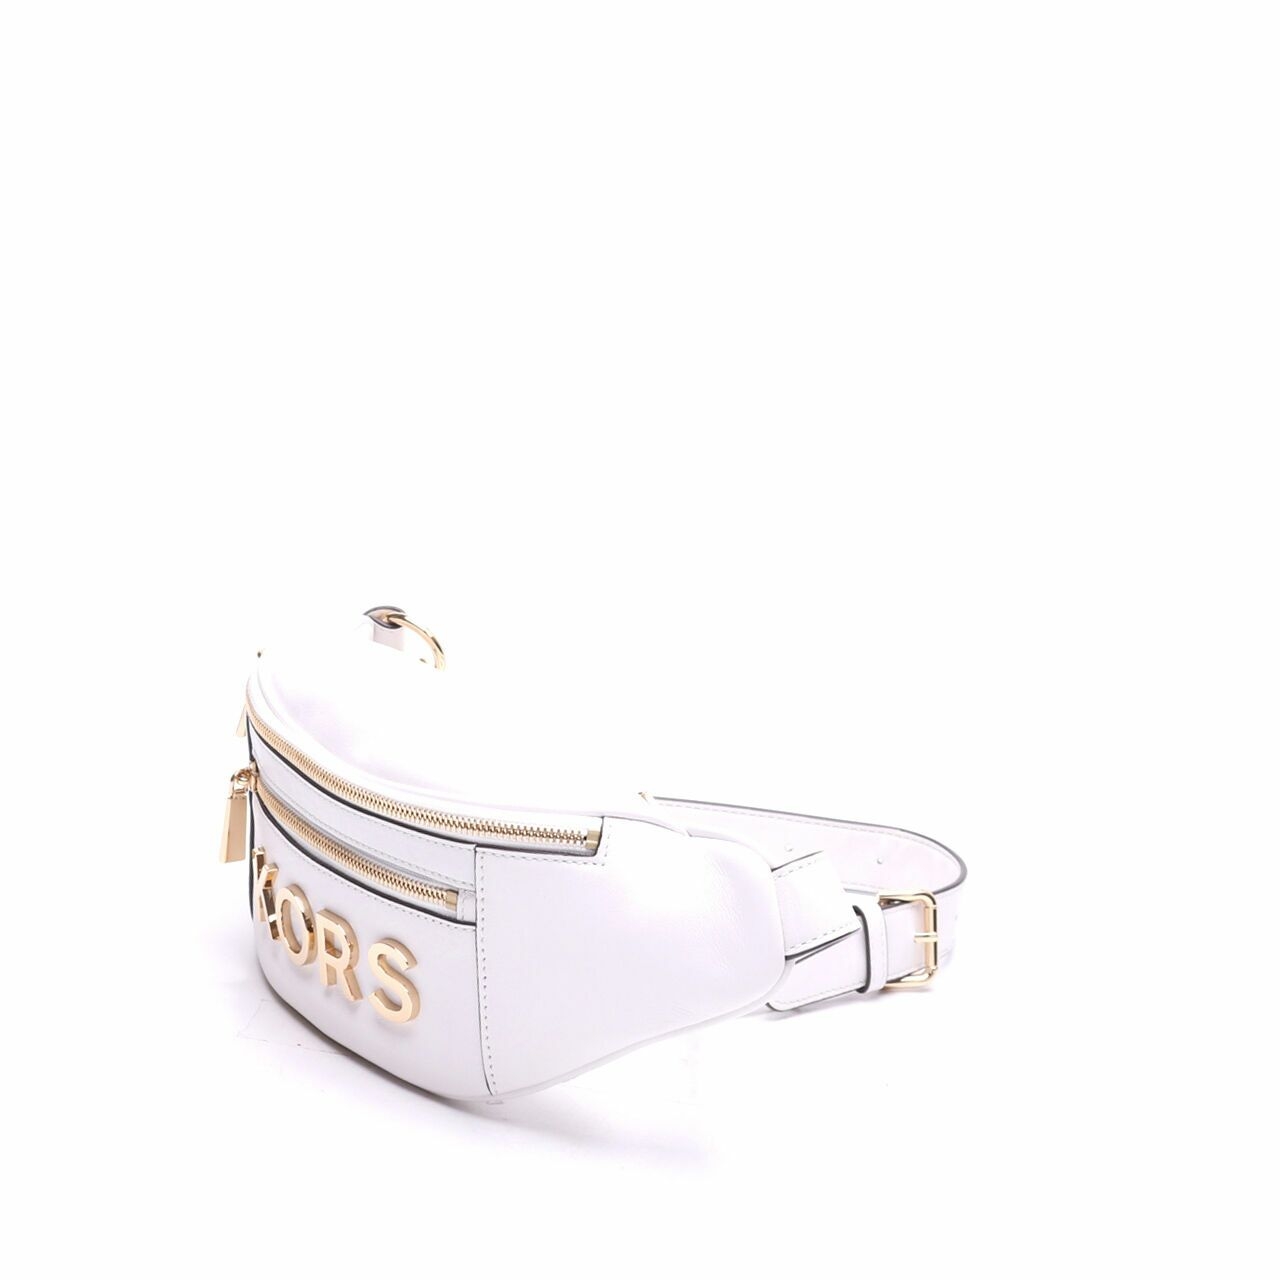 Michael Kors White/Gold Leather Waistpack